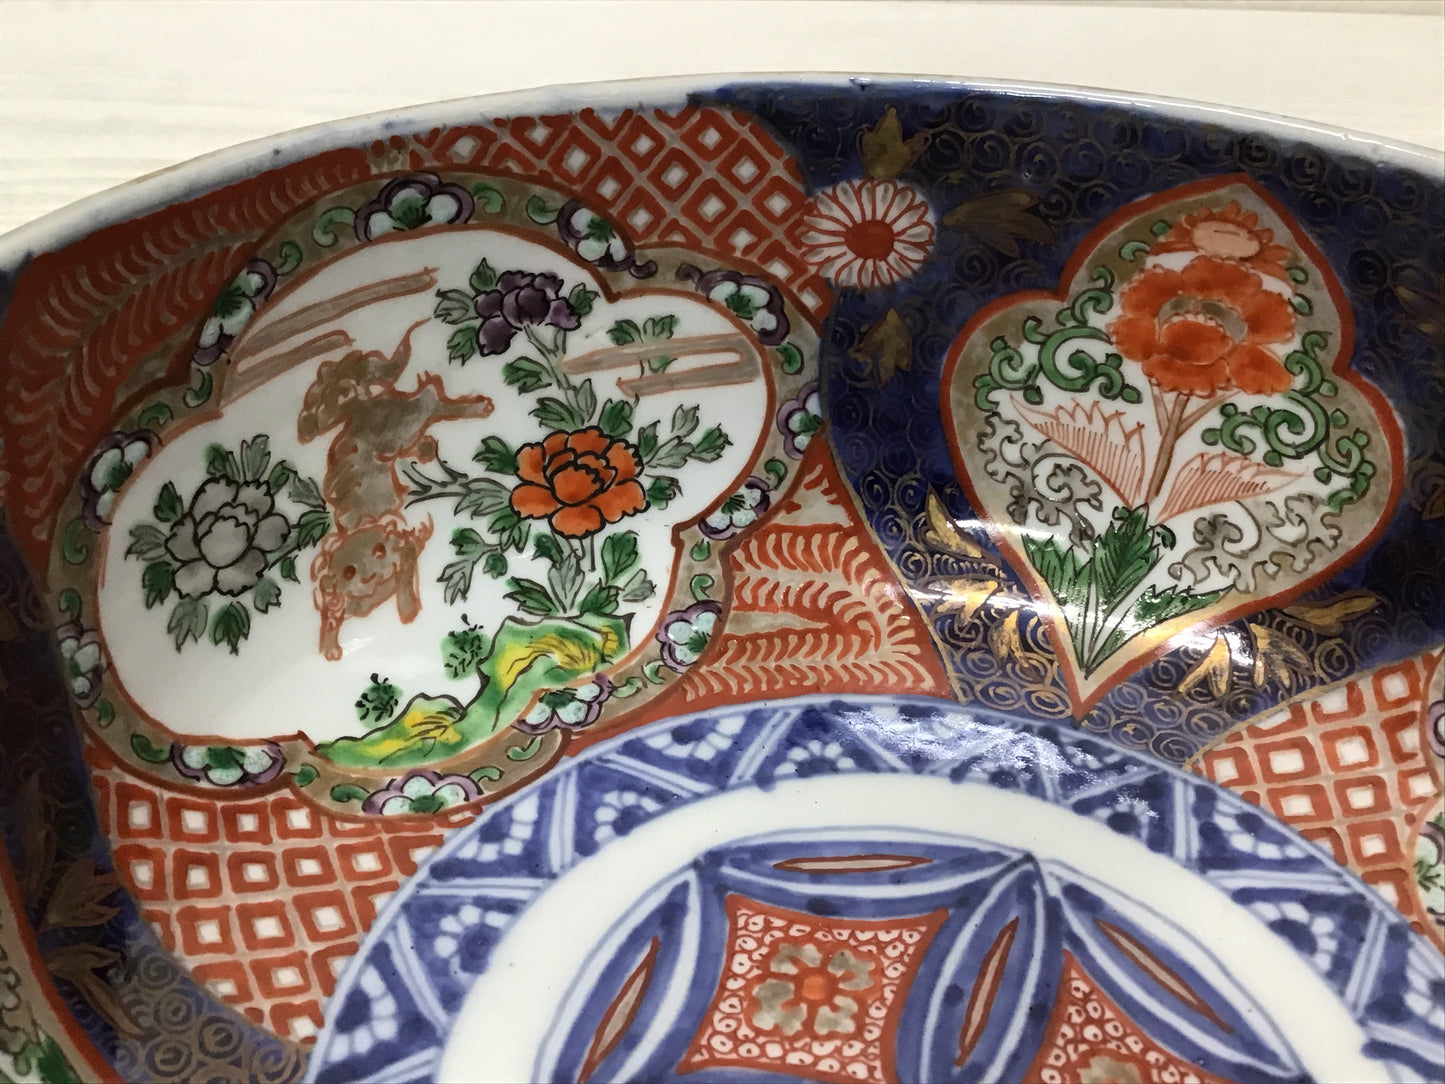 Y2515 CHAWAN Imari-ware Koimari color Pot bowl Japan antique vintage pottery